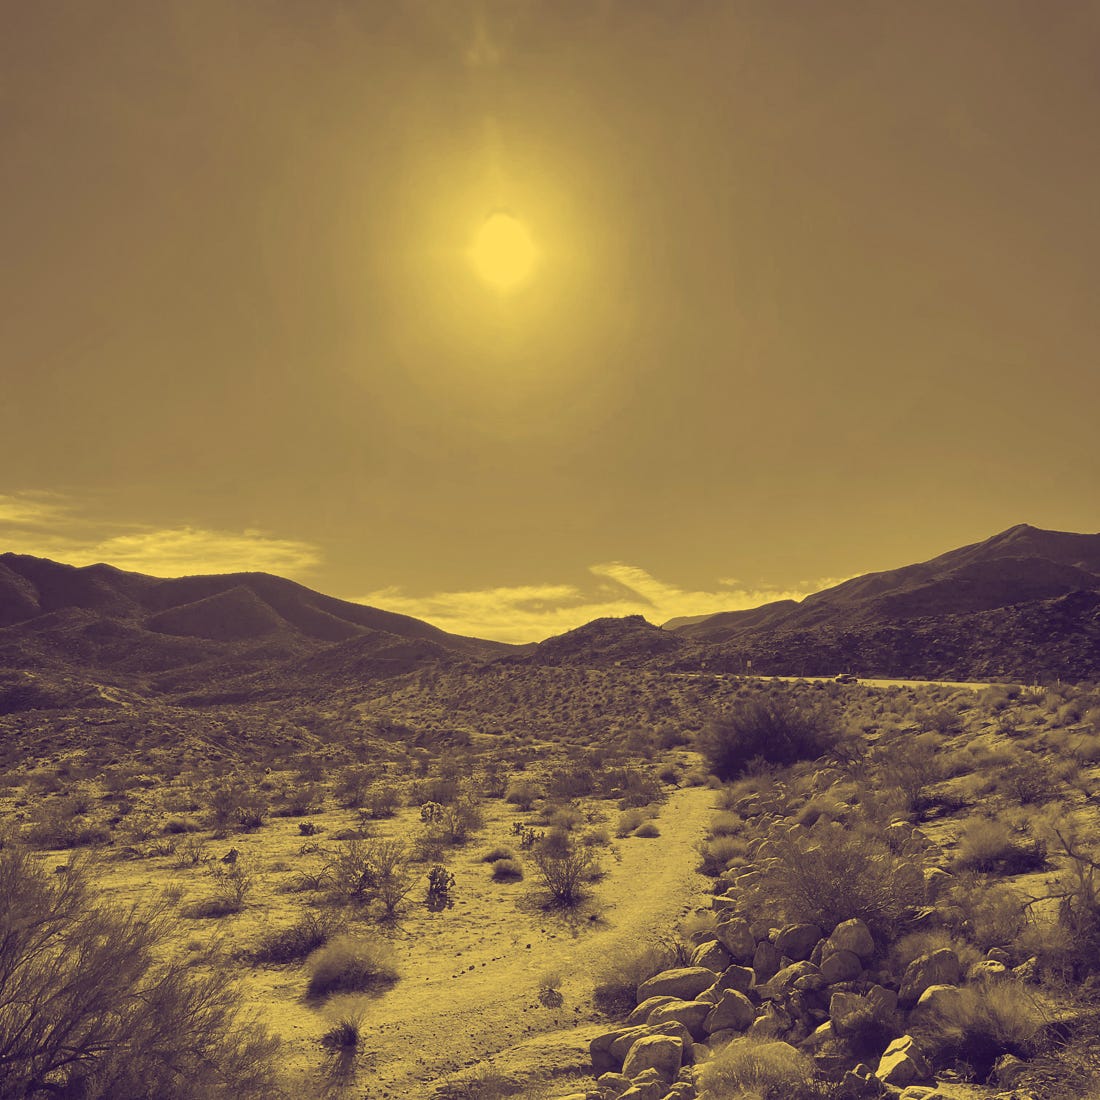 Desert Sun, copyrighted by Mark Tulin